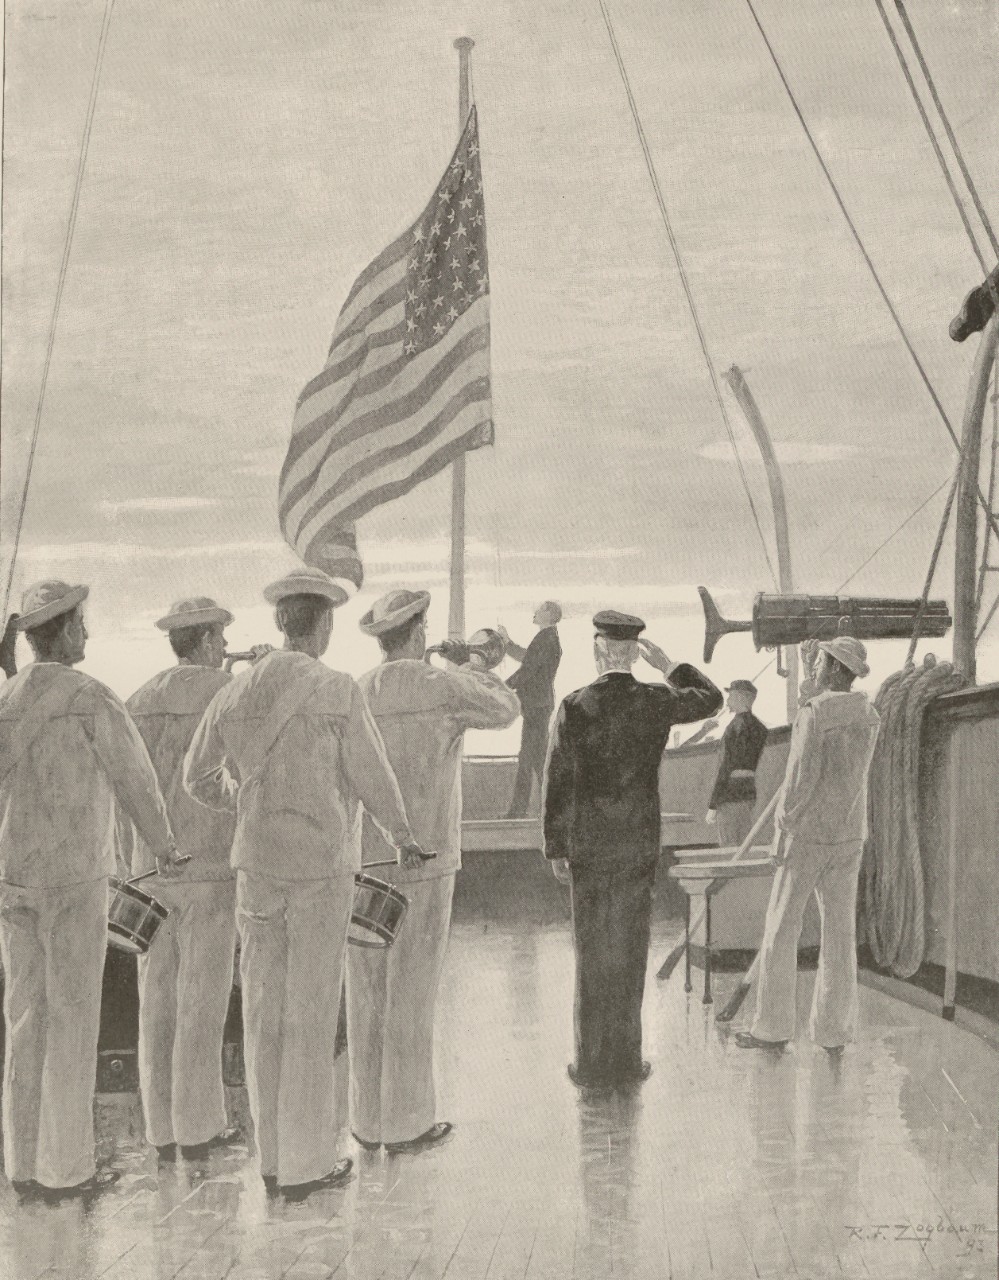 An engraving of a flag raising on a ship.